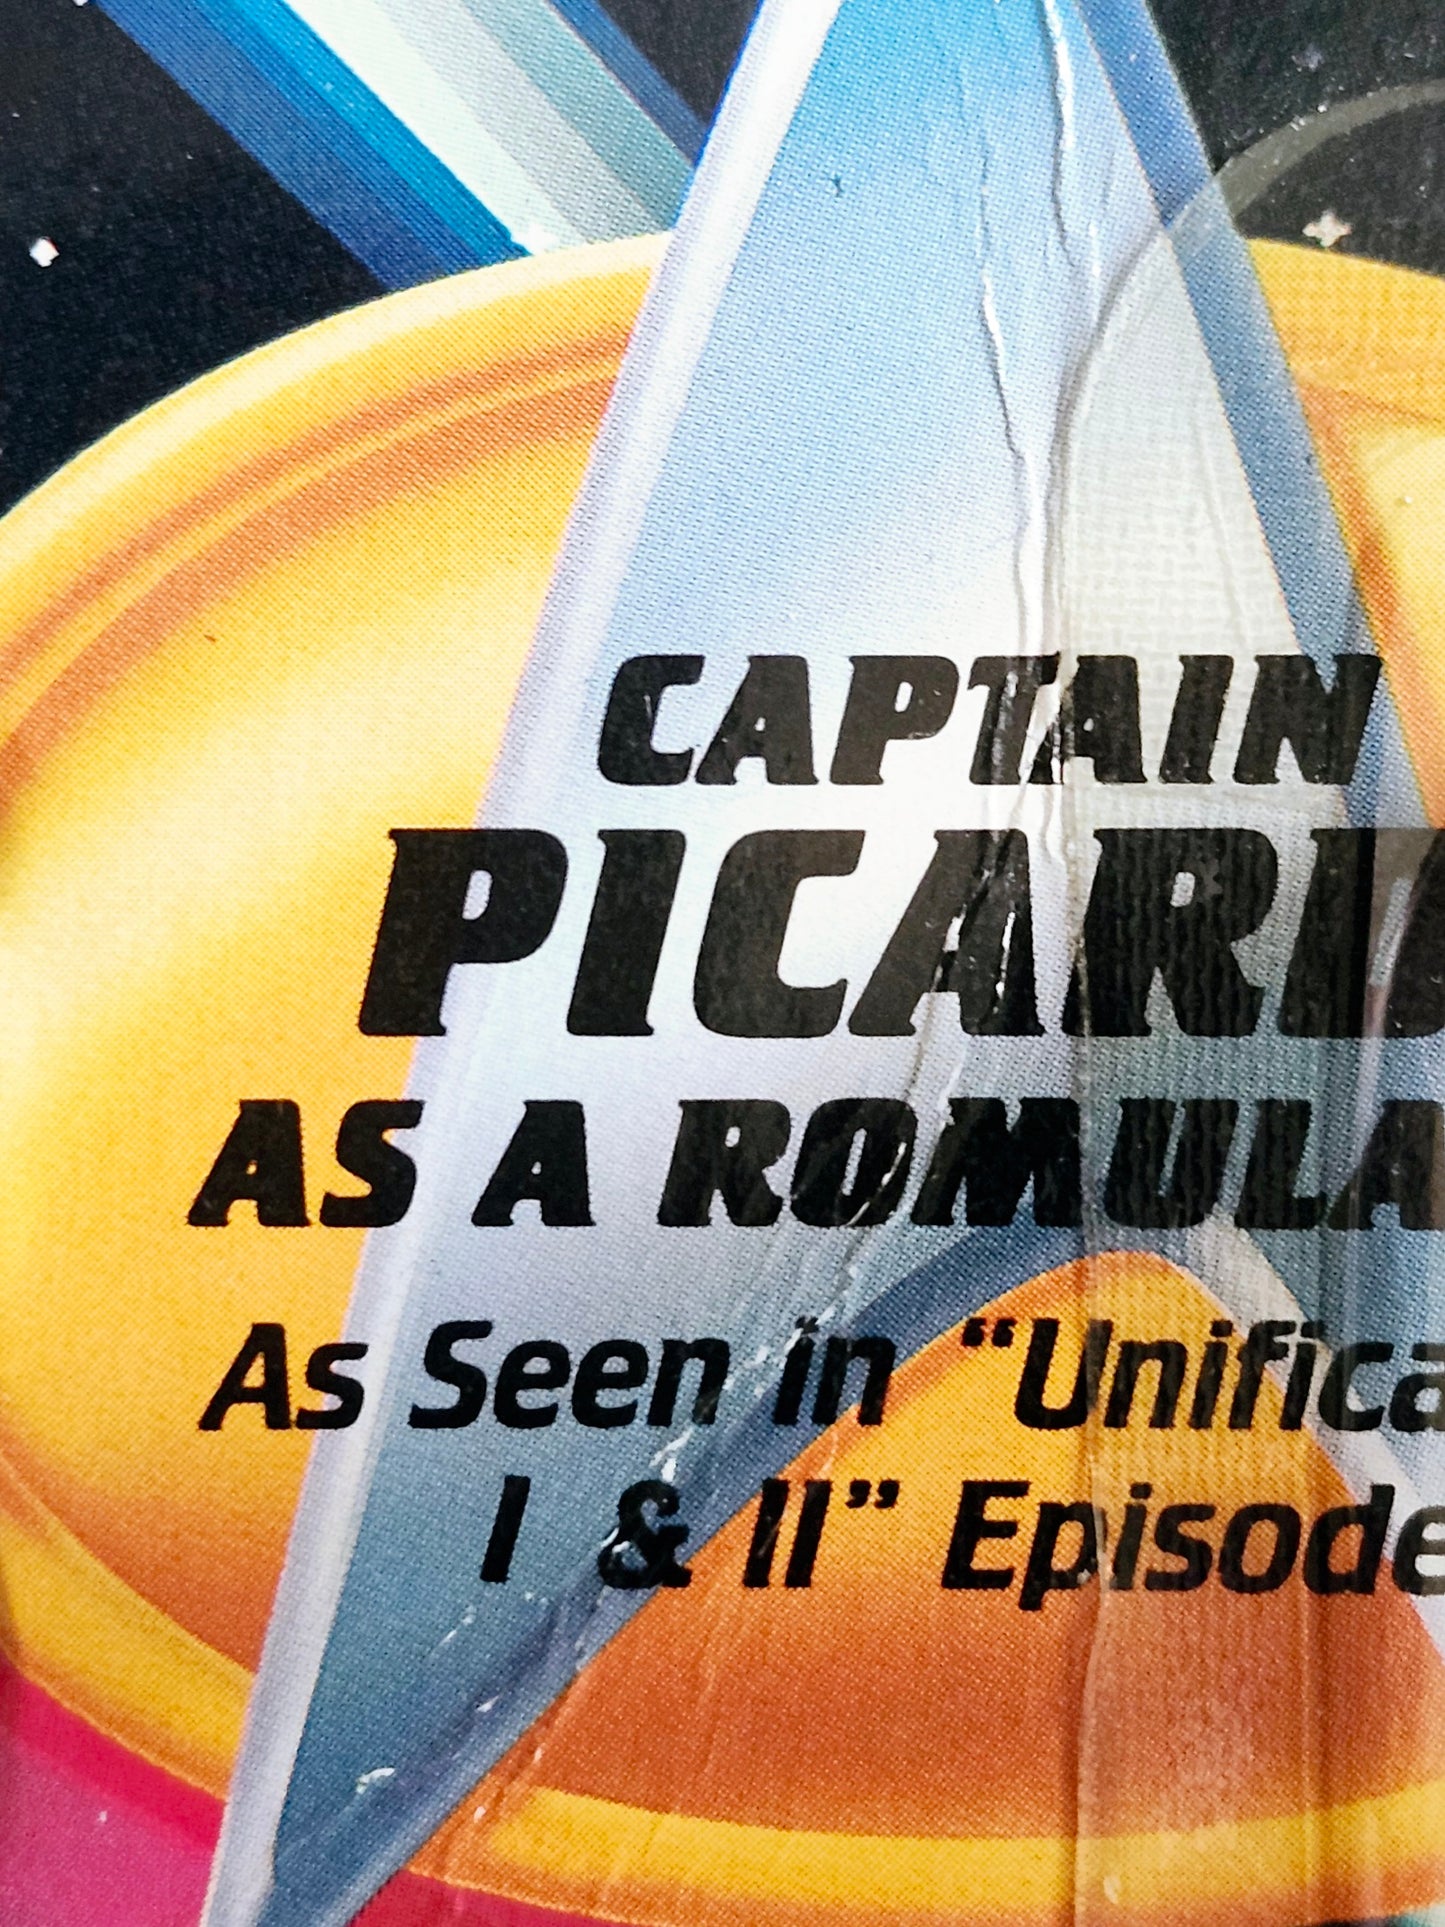 Star Trek: The Next Generation Captain Picard as a Romulan Action Figure